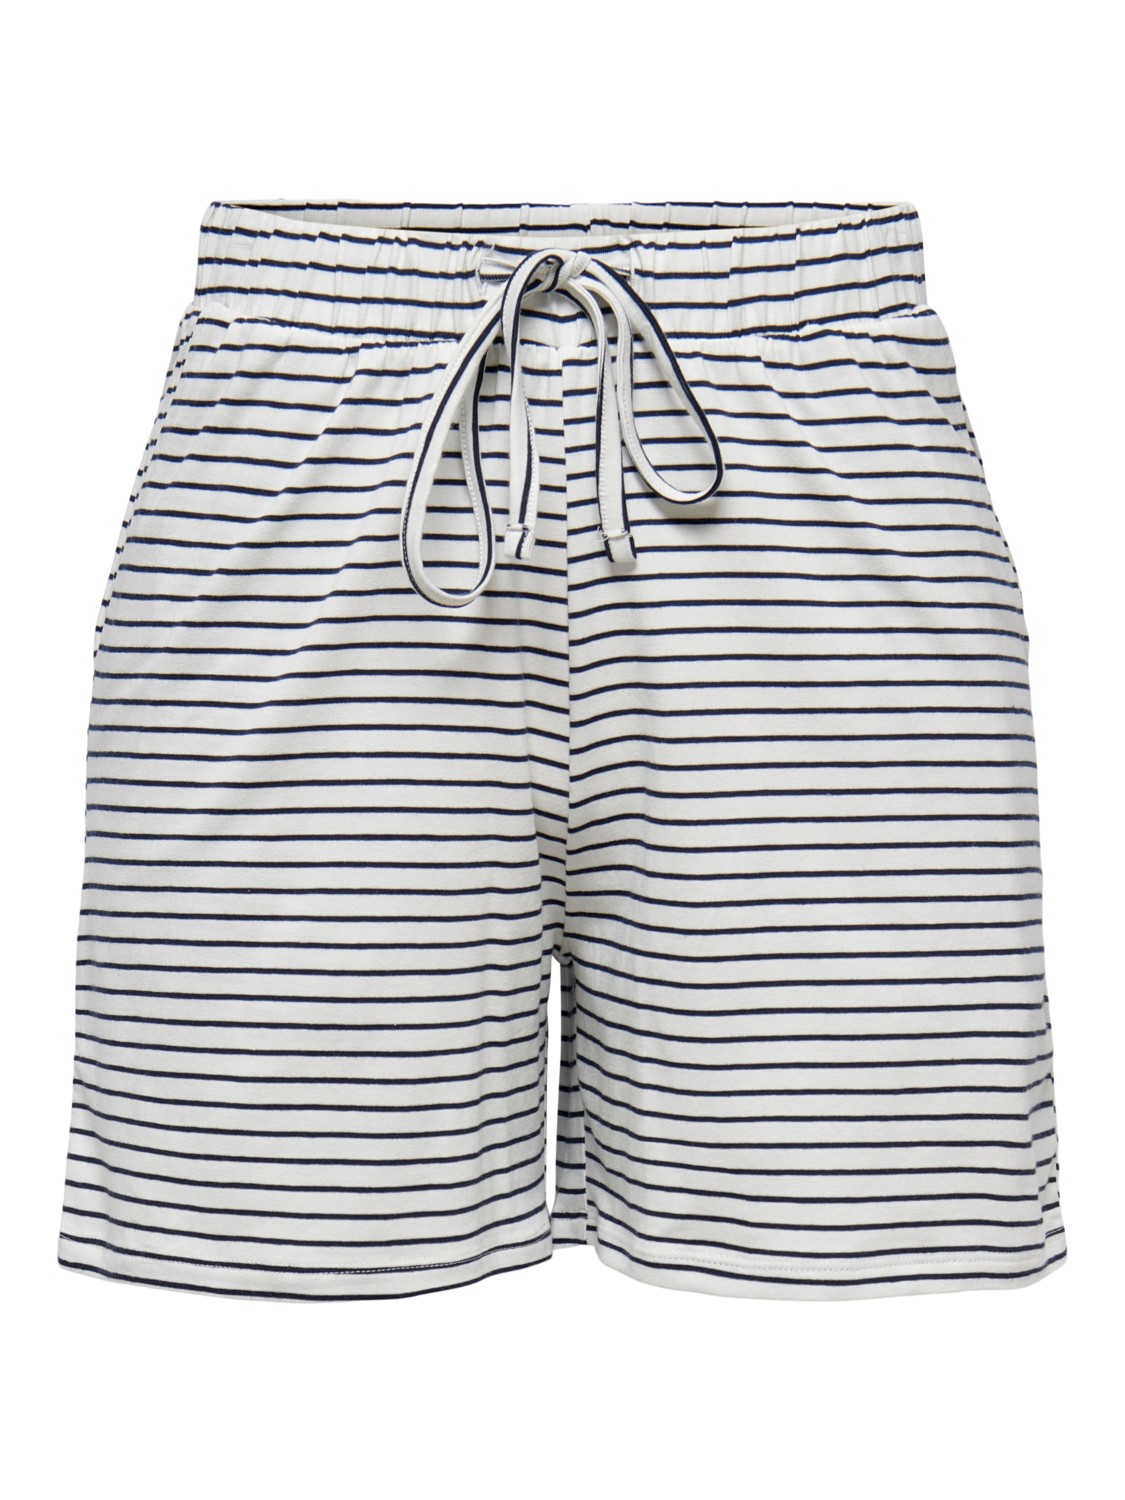 JDY Pablo Shorts Jersey, offwhite/marineblå stripet